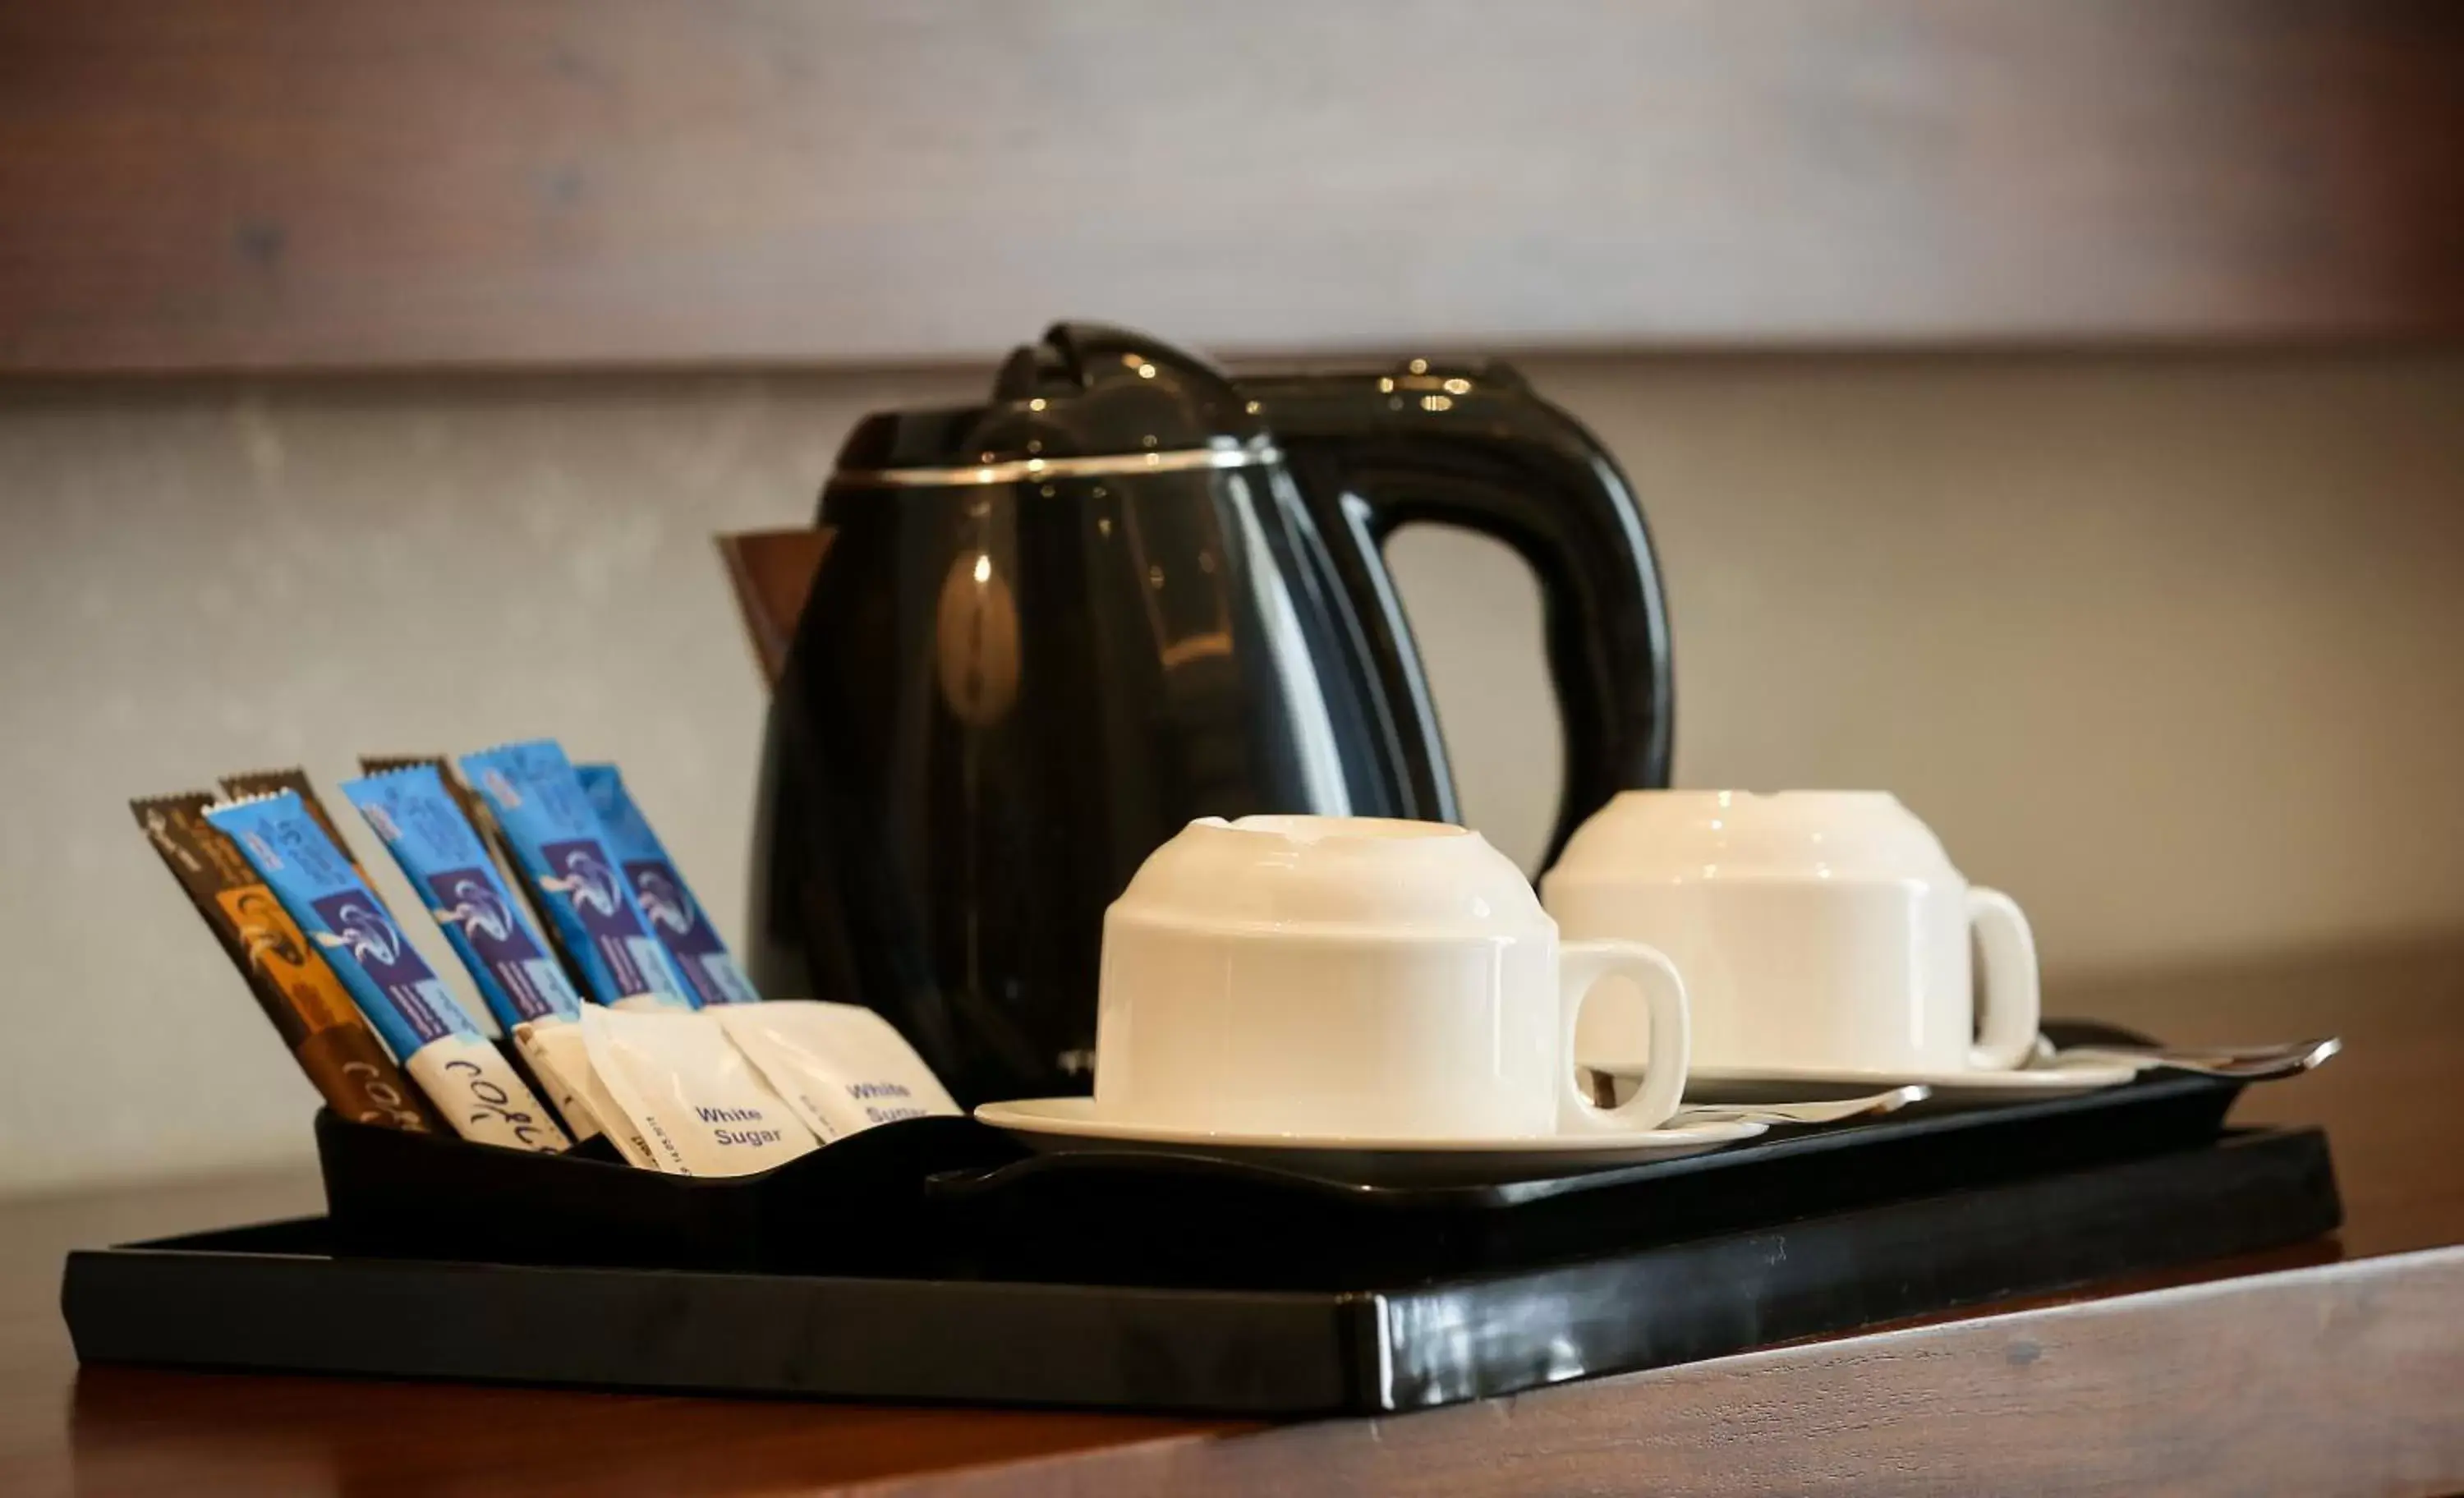 Coffee/tea facilities in The Golden Crown Hotel